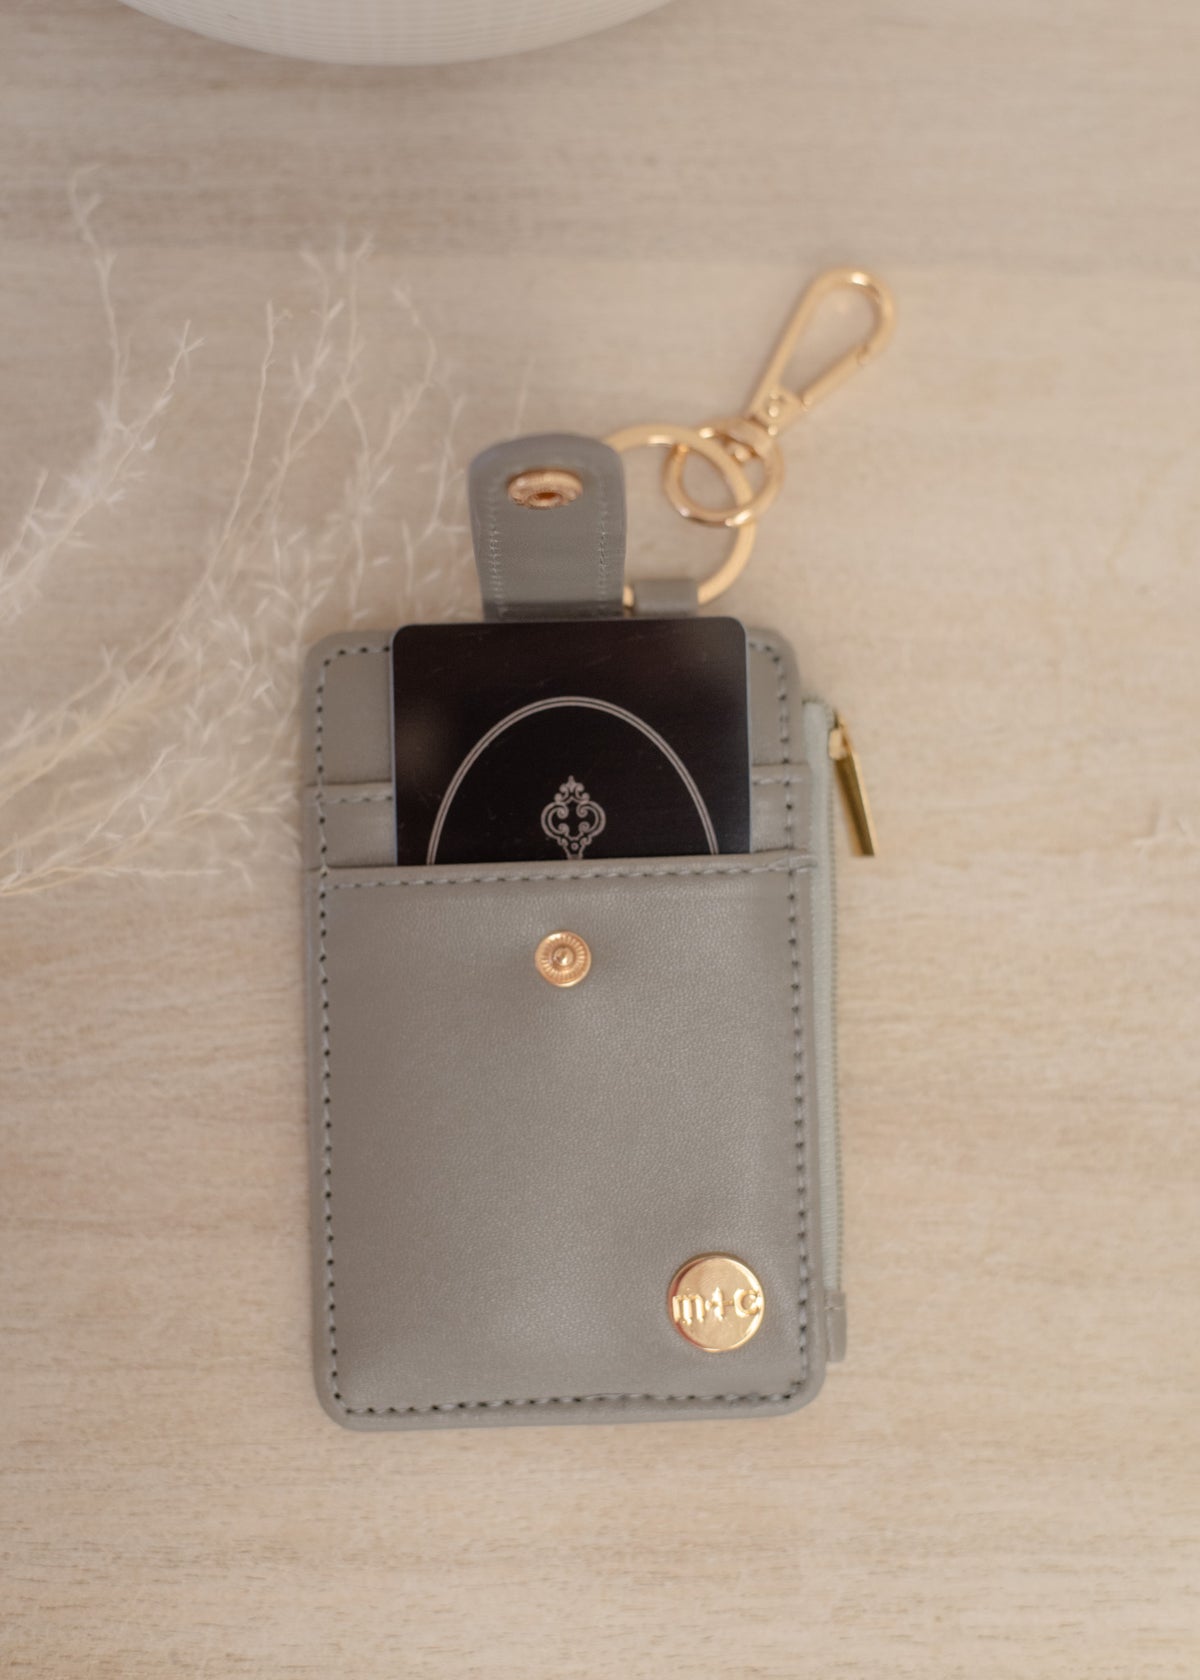 The Ava Keychain Wallet